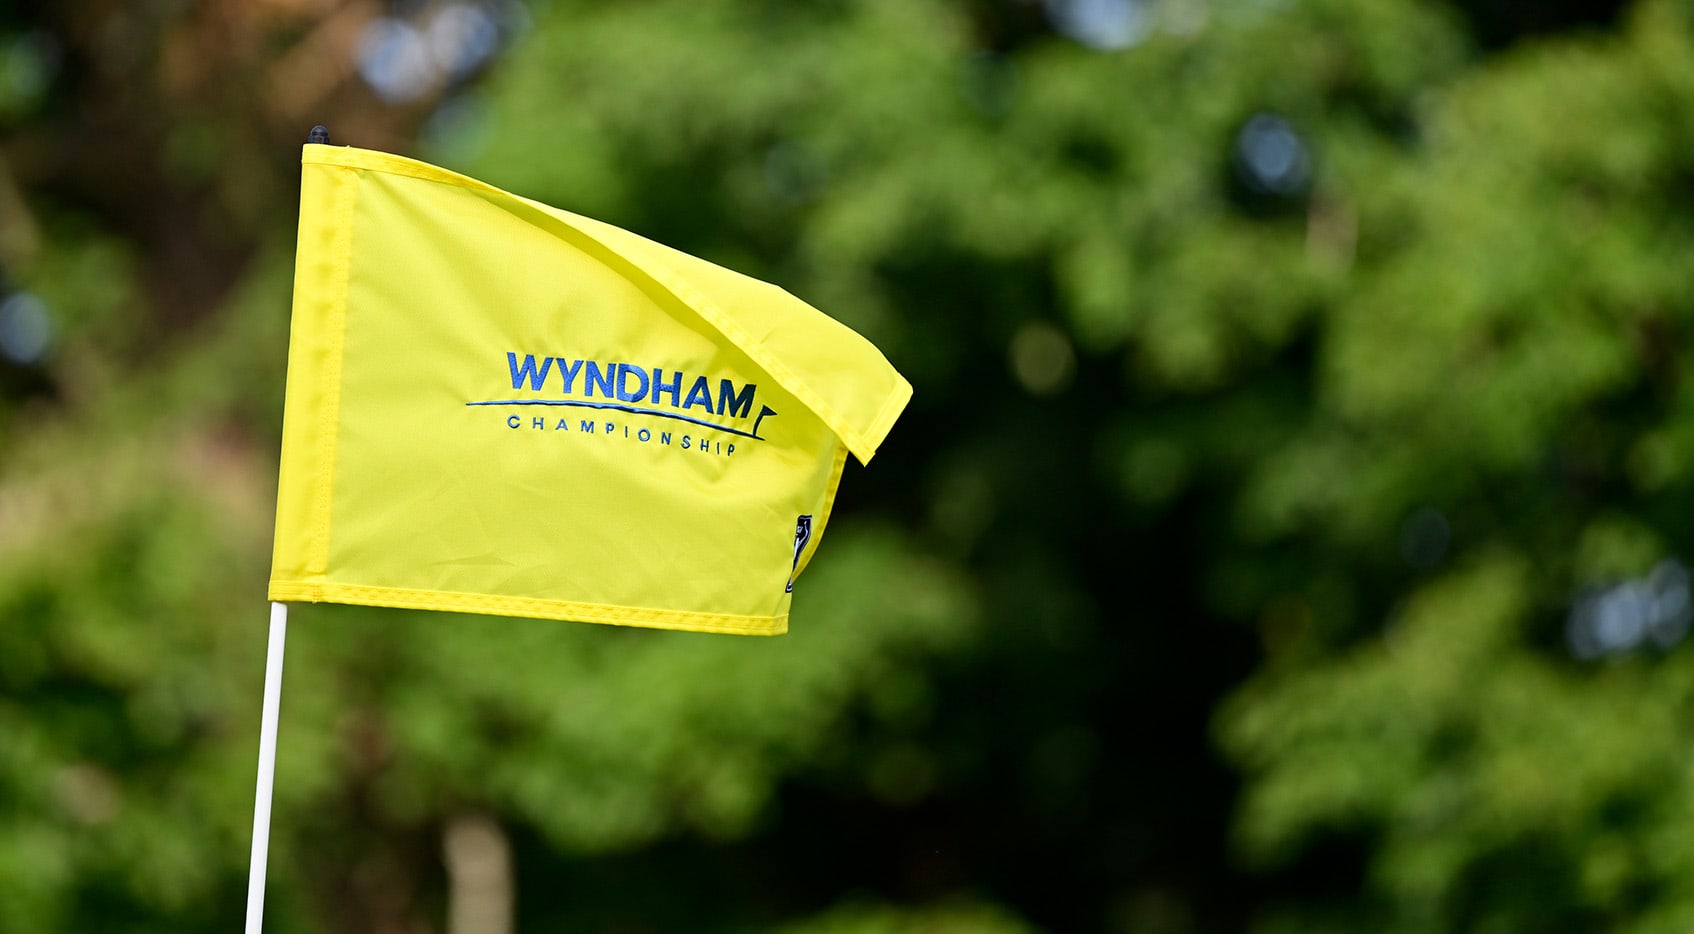 Monday qualifiers Wyndham Championship PGA TOUR